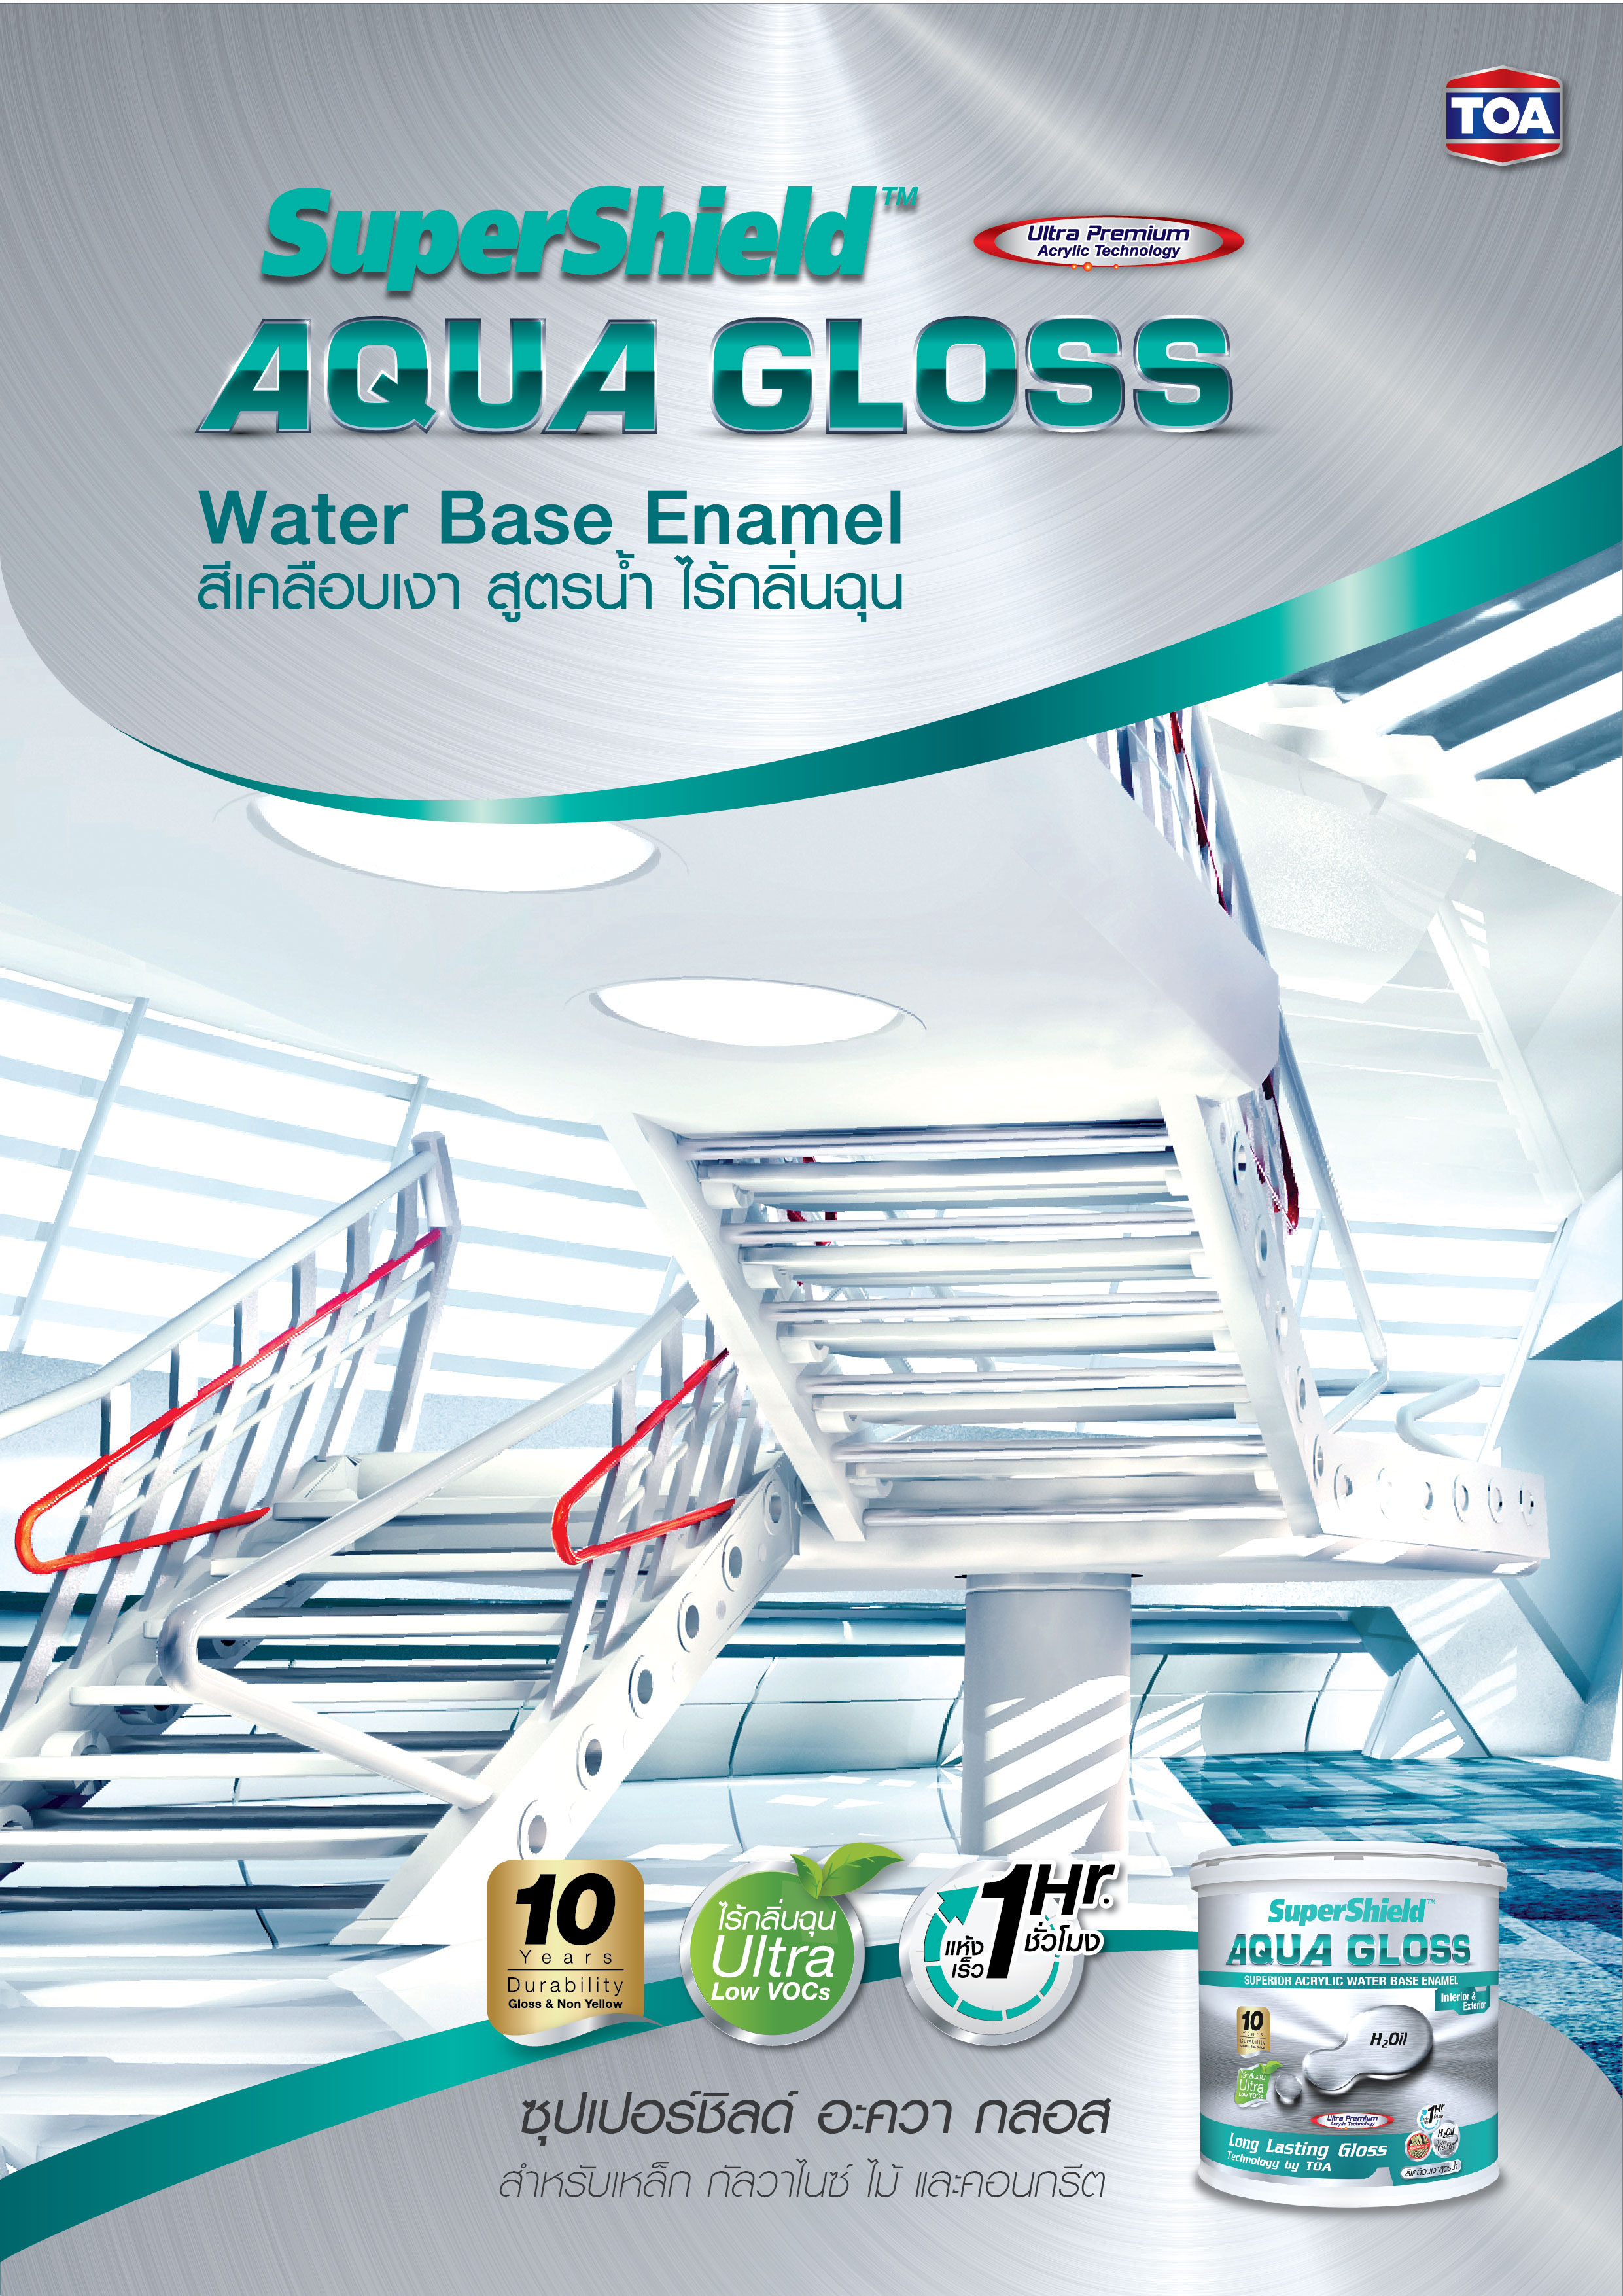 e-catalog-supershield-aqua-gloss_2019